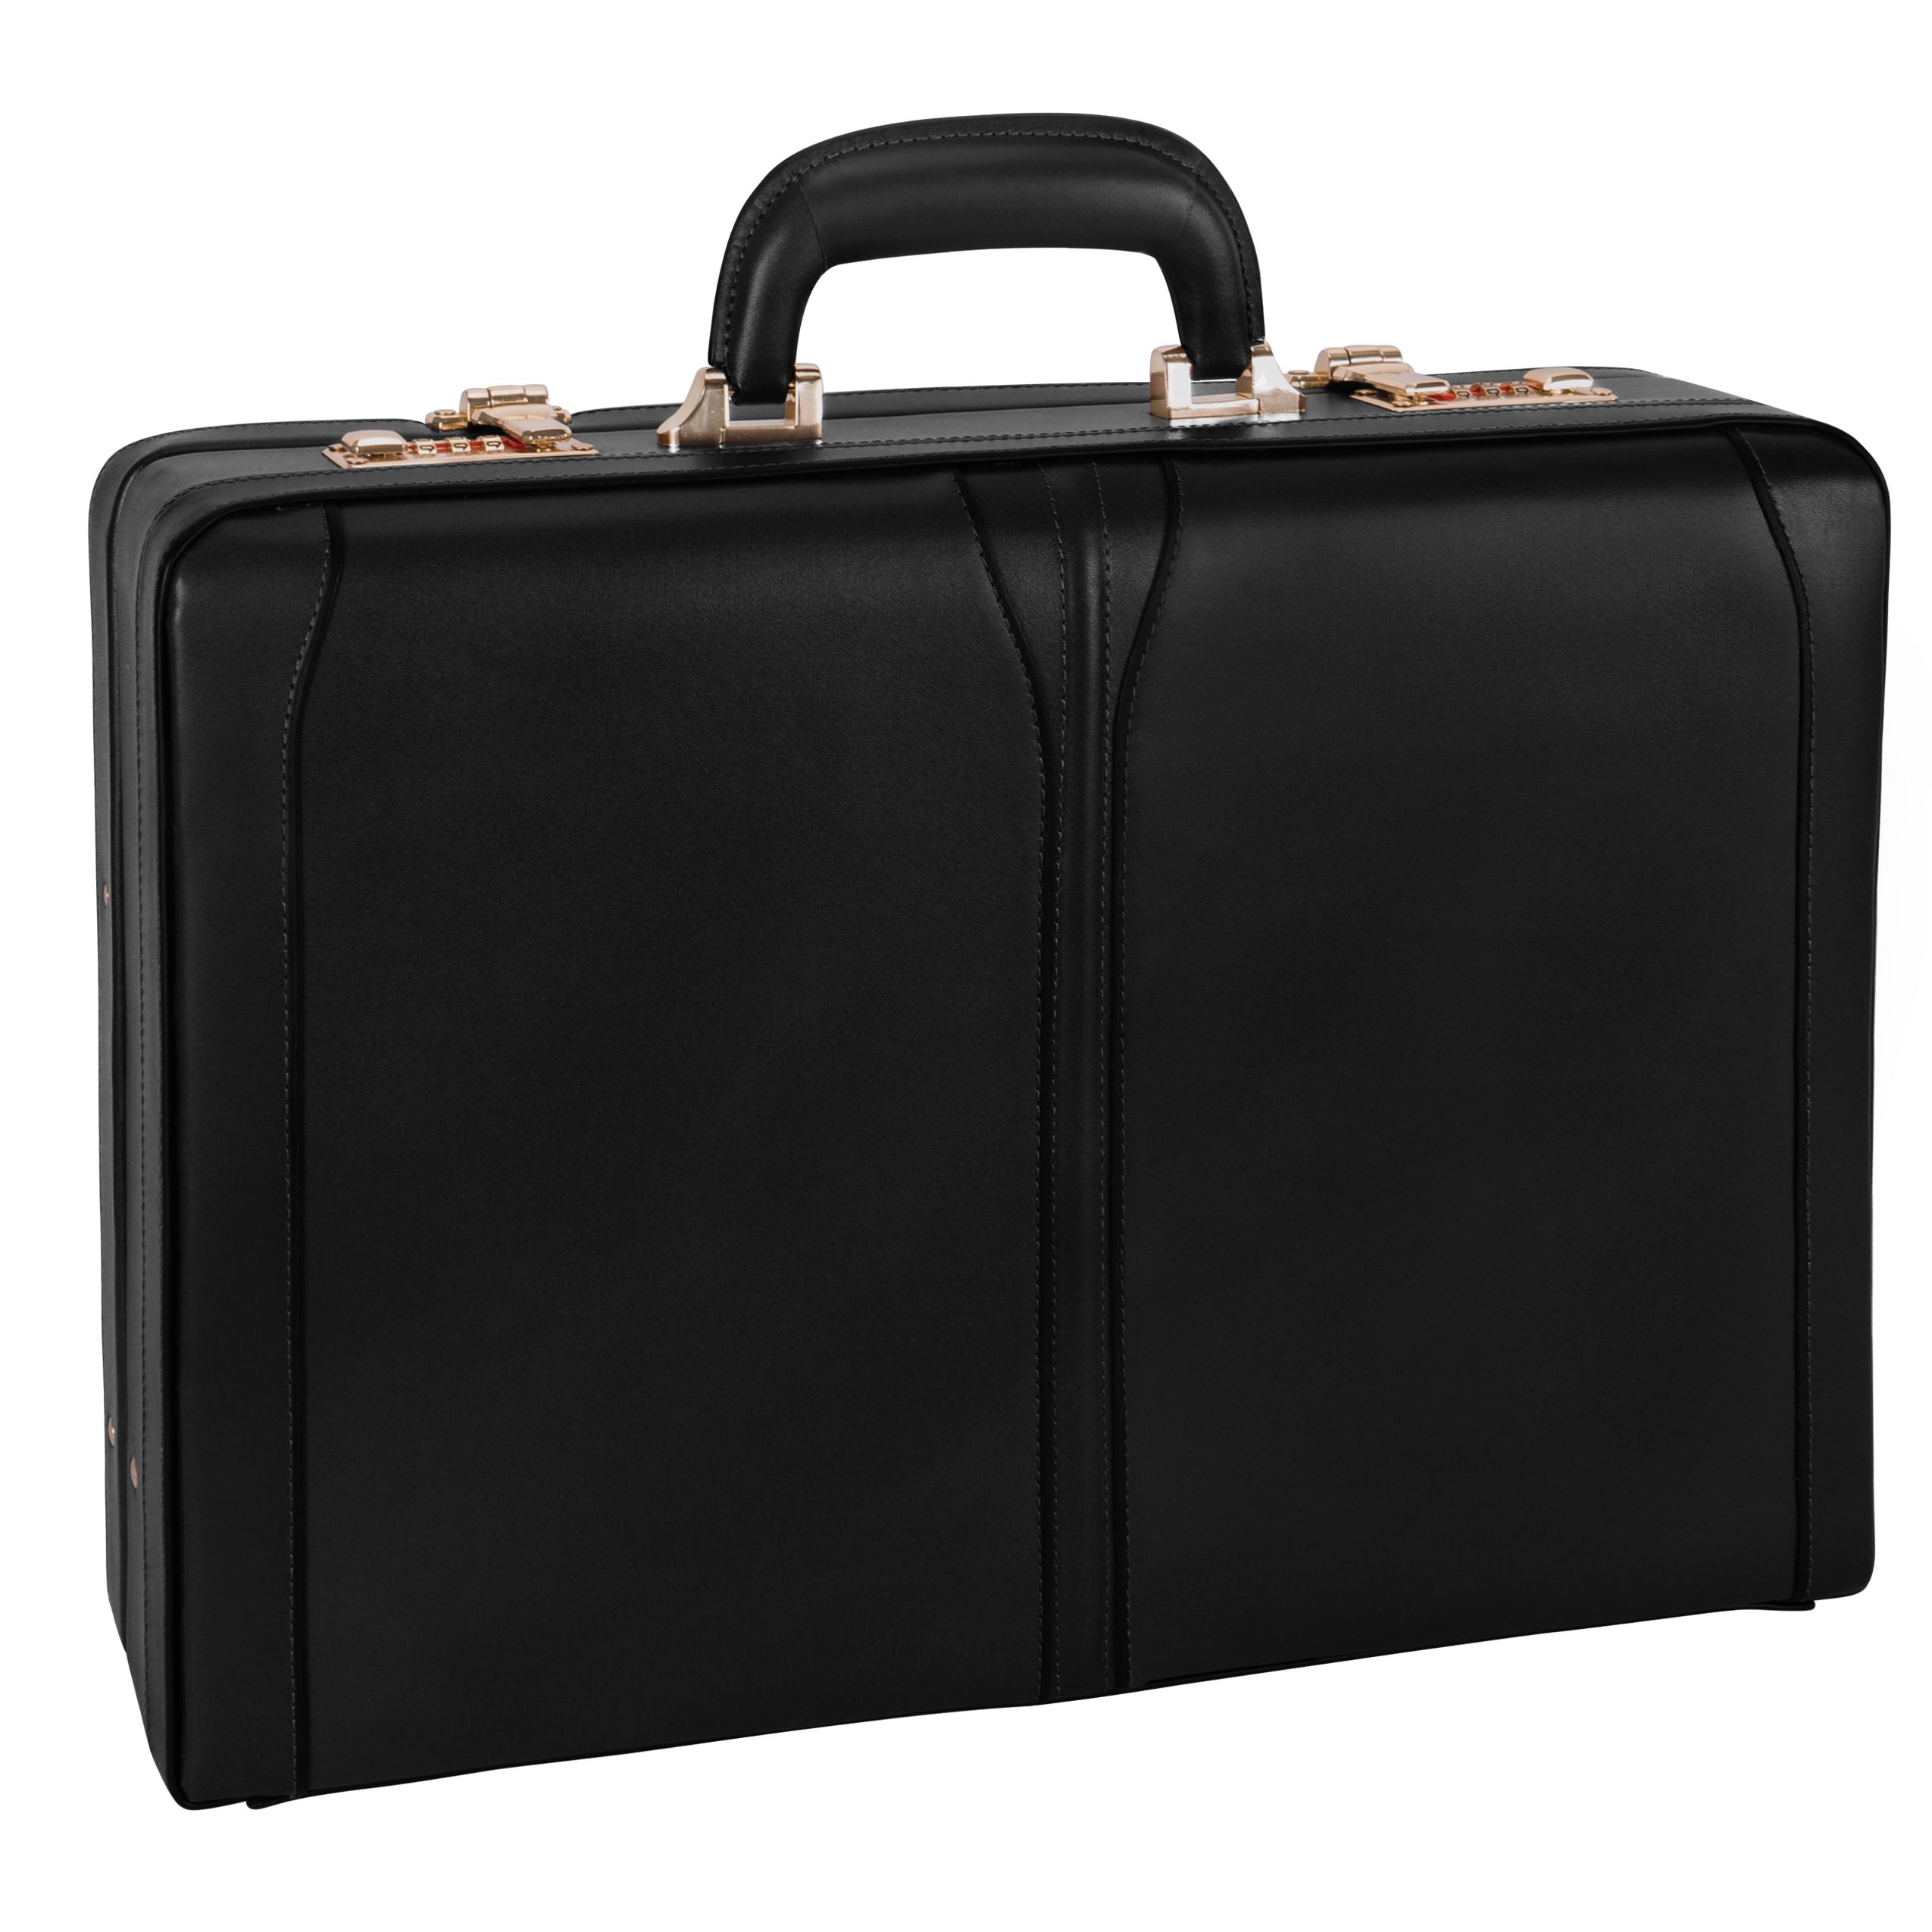 Mcklein Turner 80485 Black Leather Expandable Attache Case